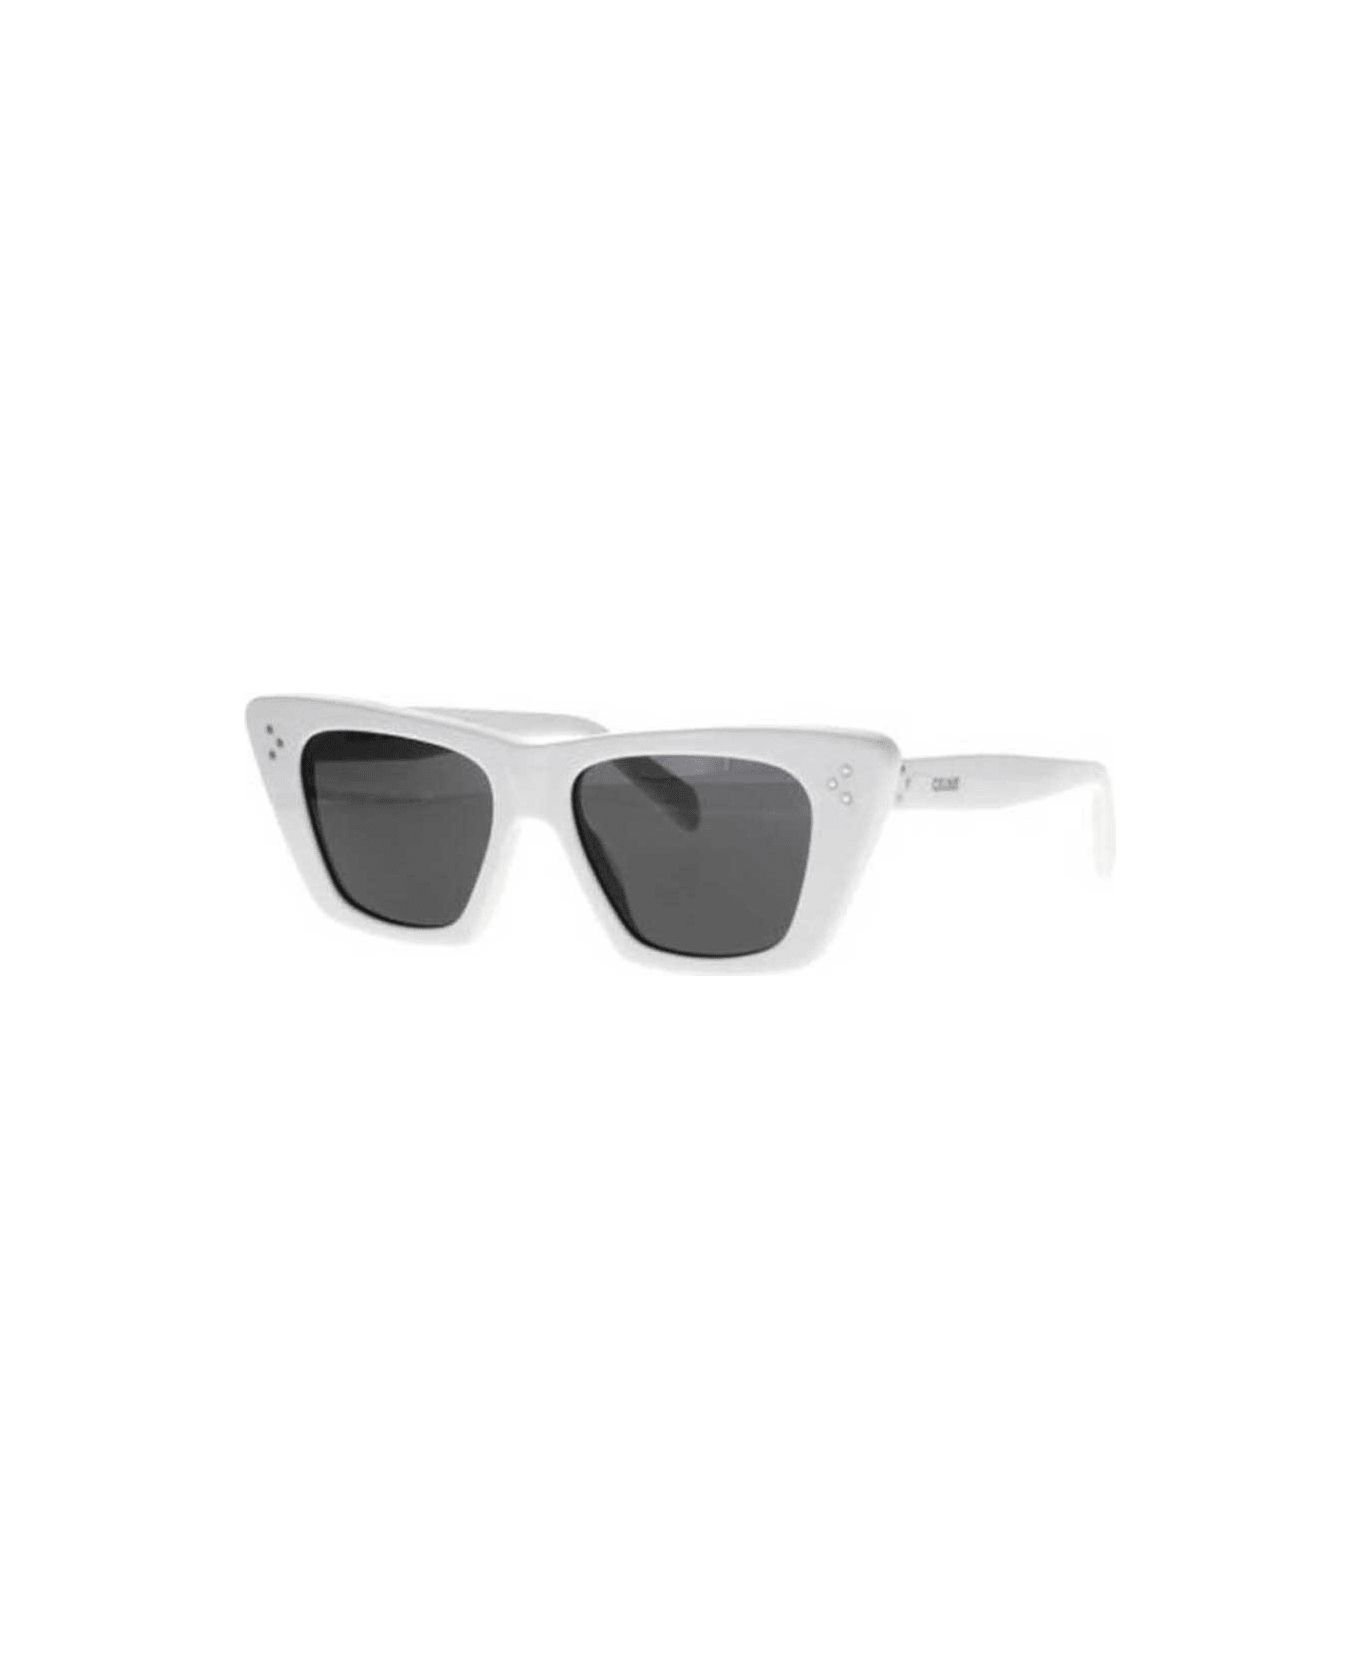 Celine Sunglasses - Bianco/Grigio